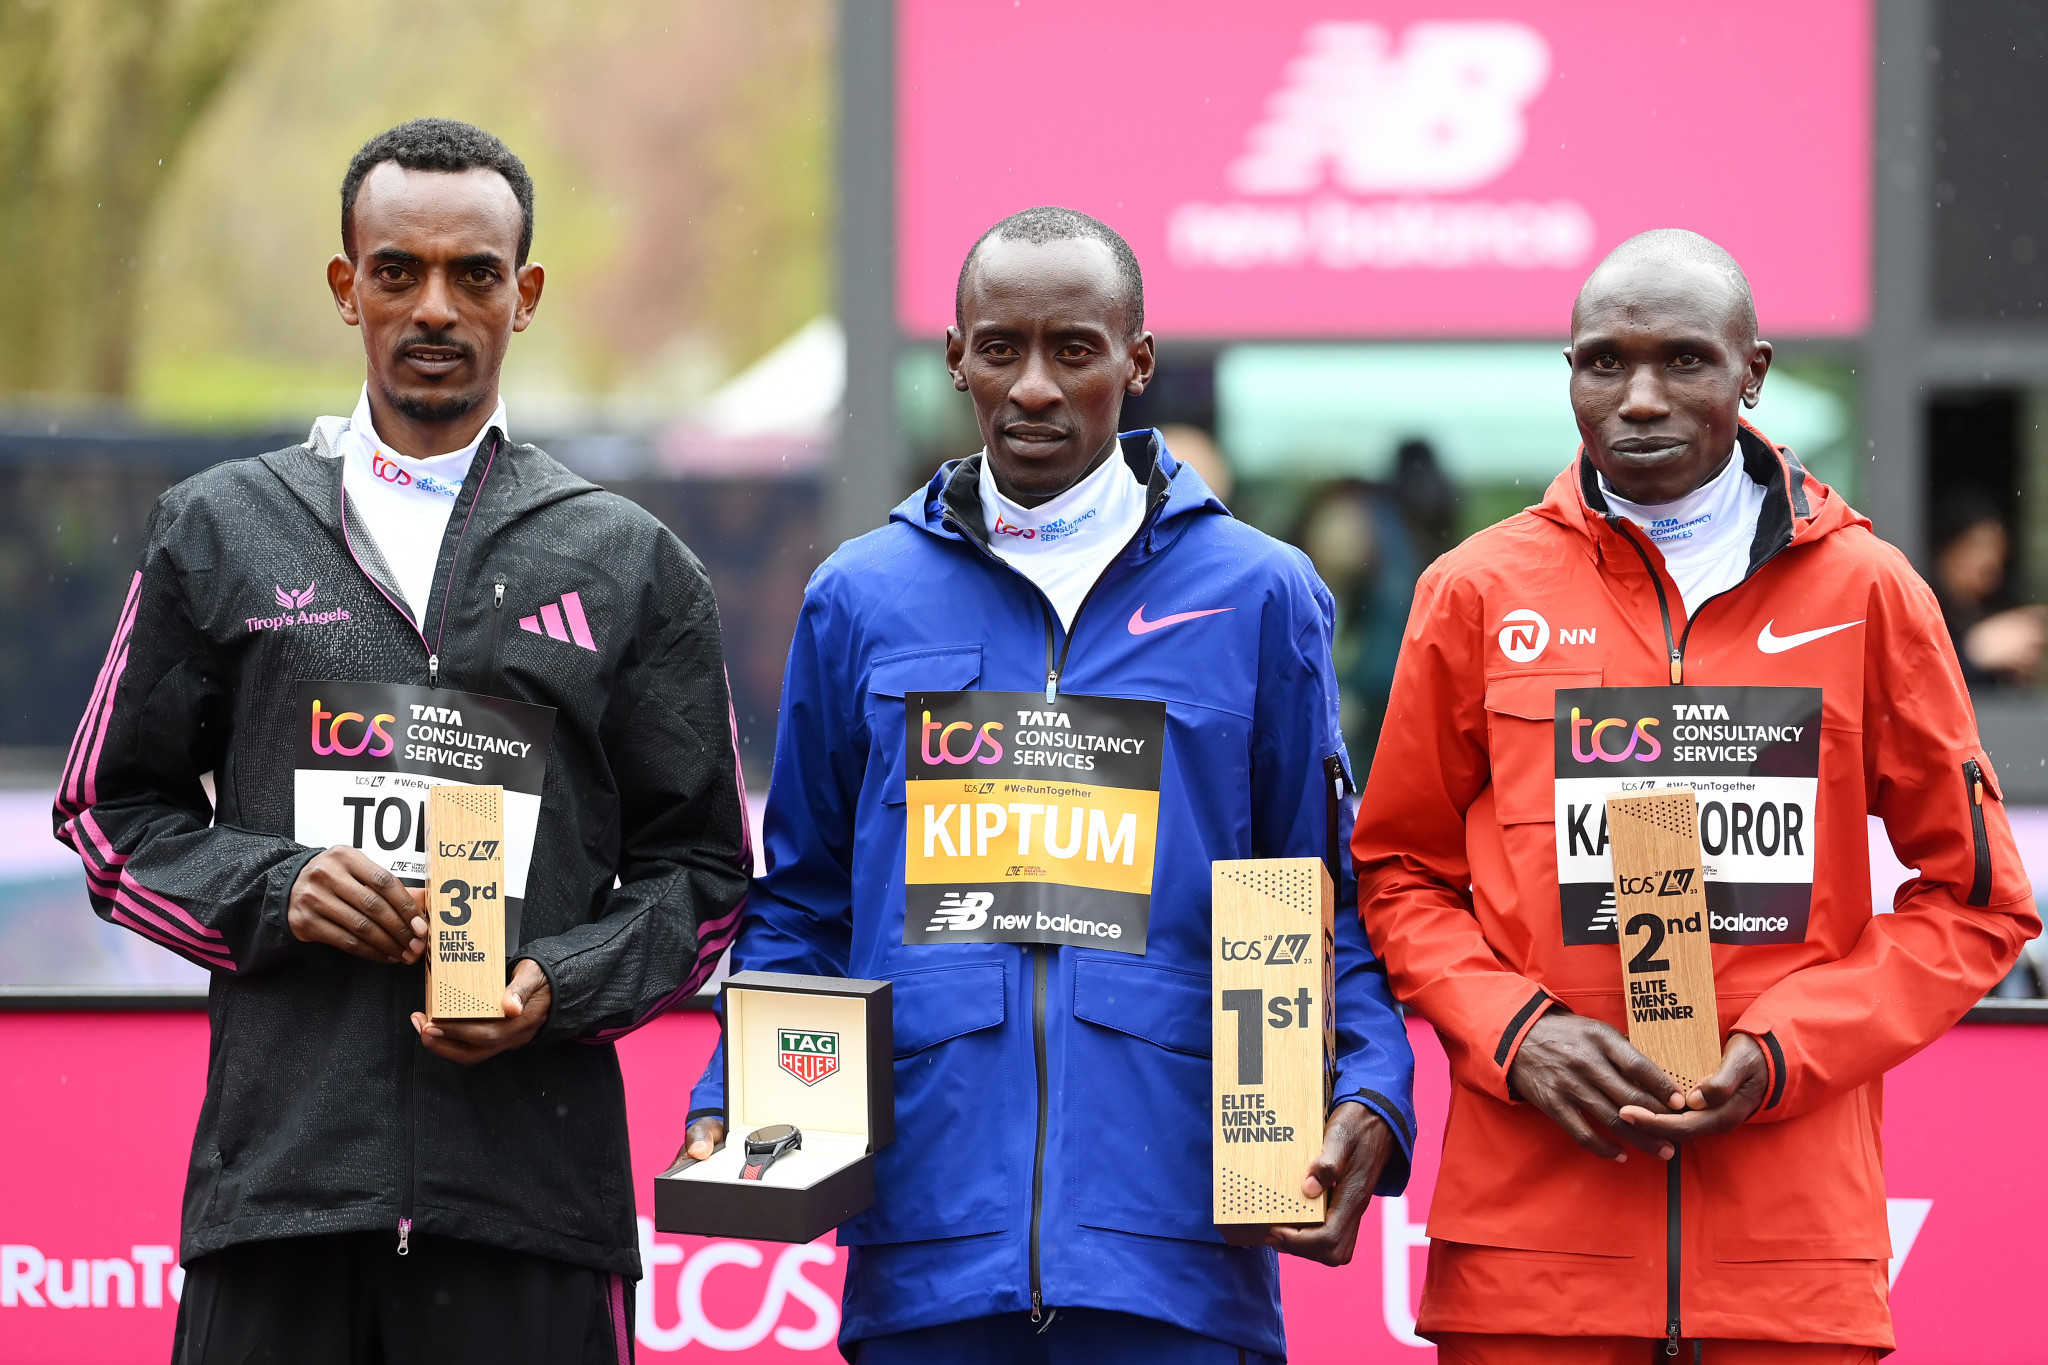 The podium in the men's elite race - from left Tamirat Tola, Kelvin Kiptum and Geoffrey Kamworor ©Getty Images